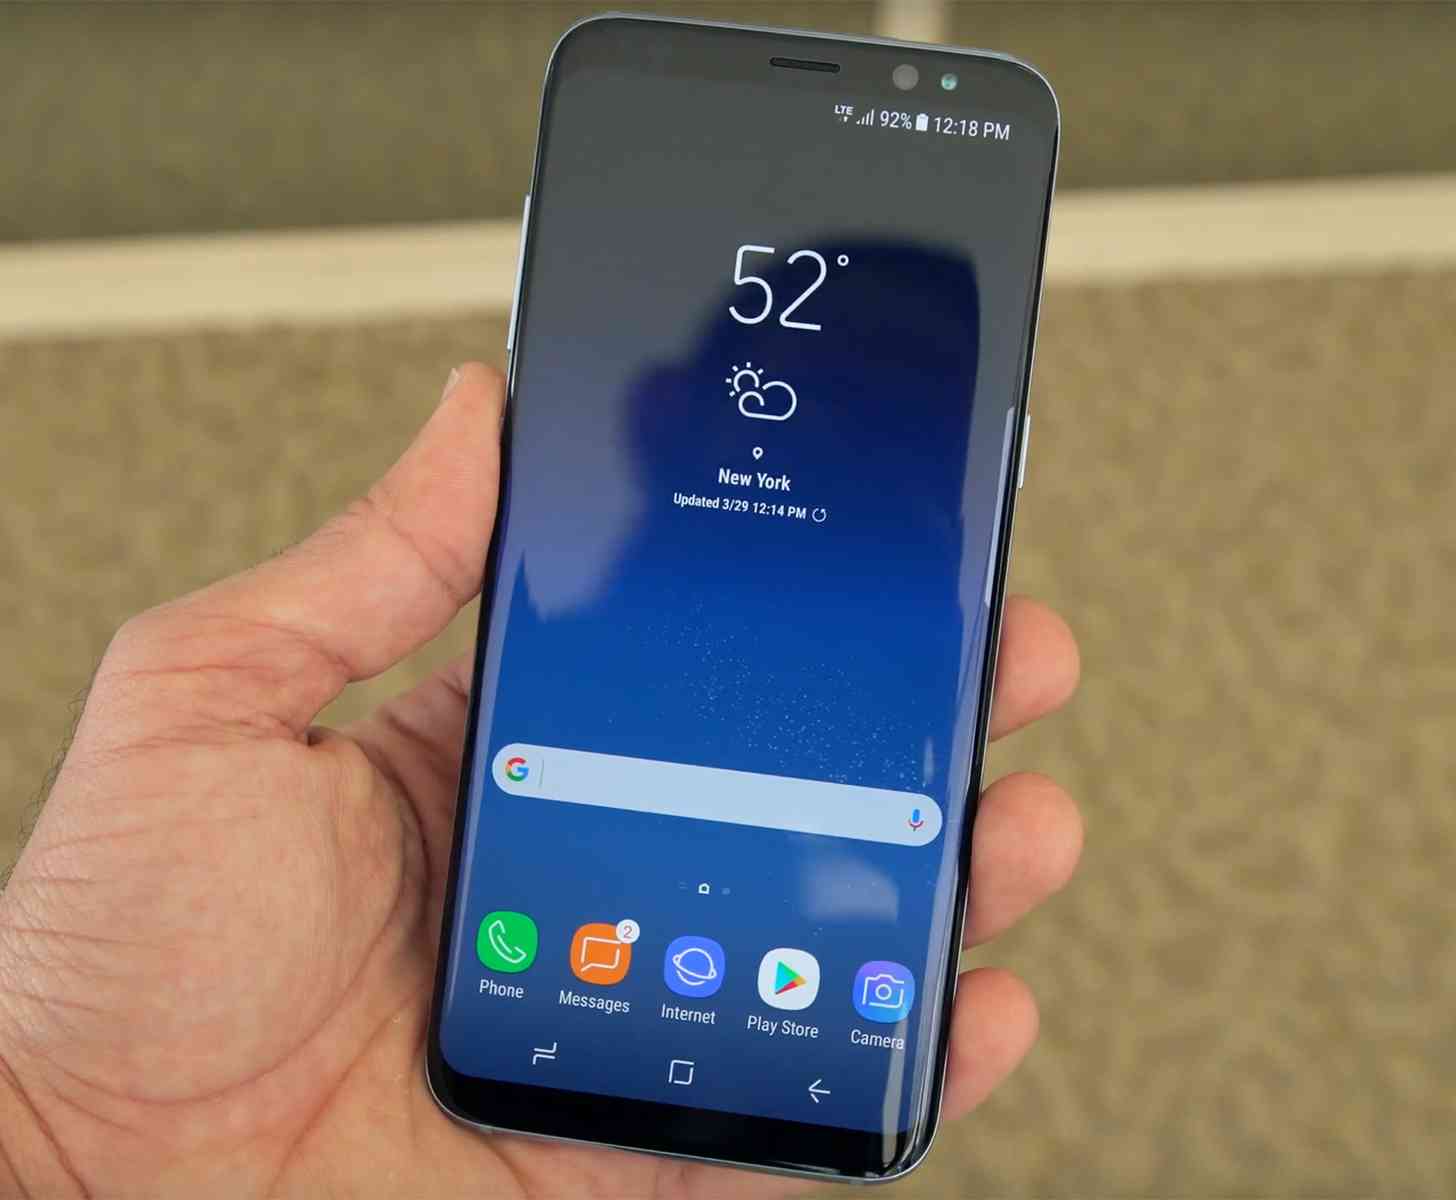 Samsung Galaxy S8 hands-on video